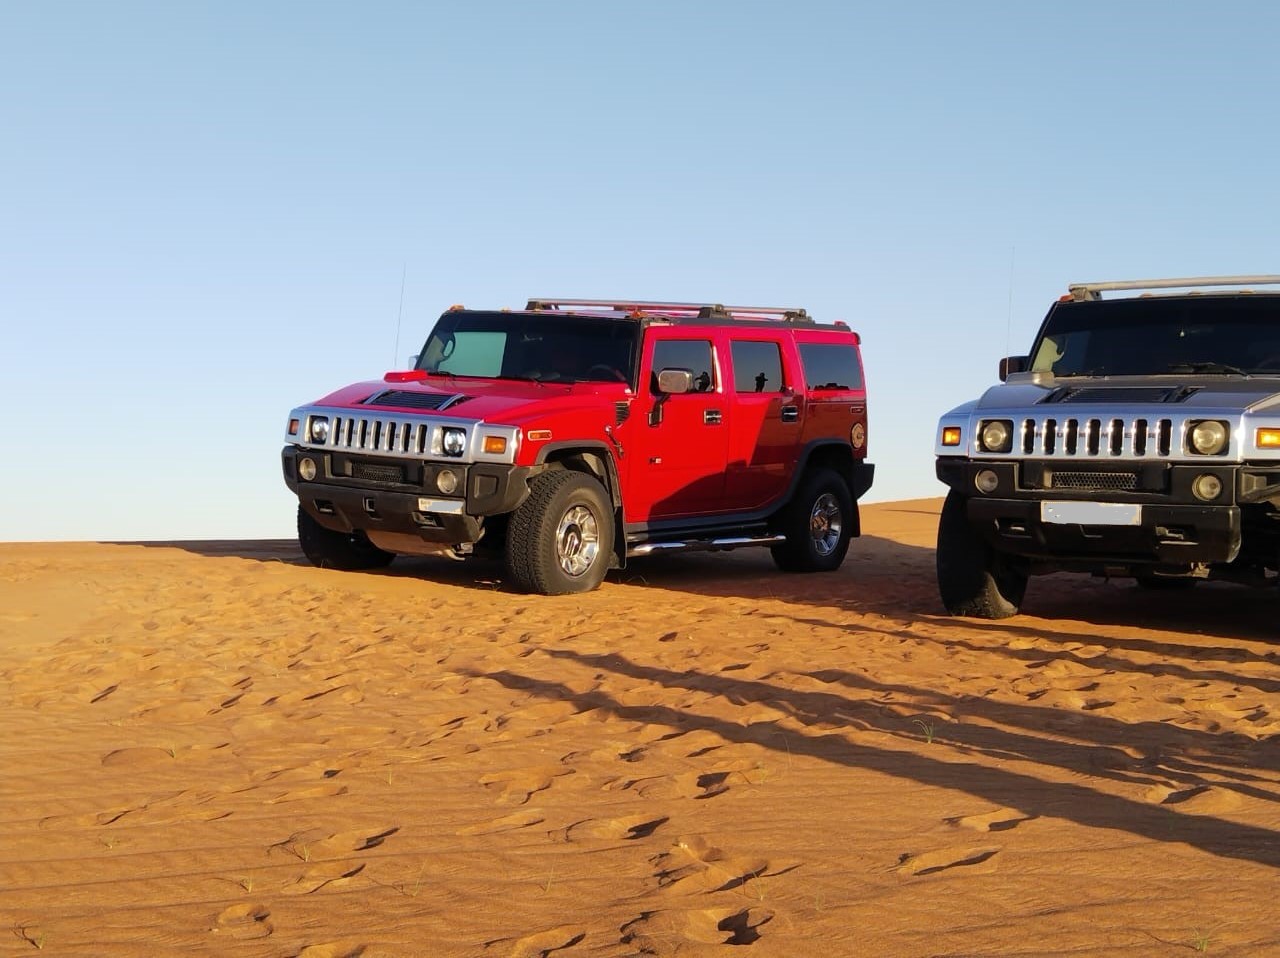 Hummer desert safari Dubai